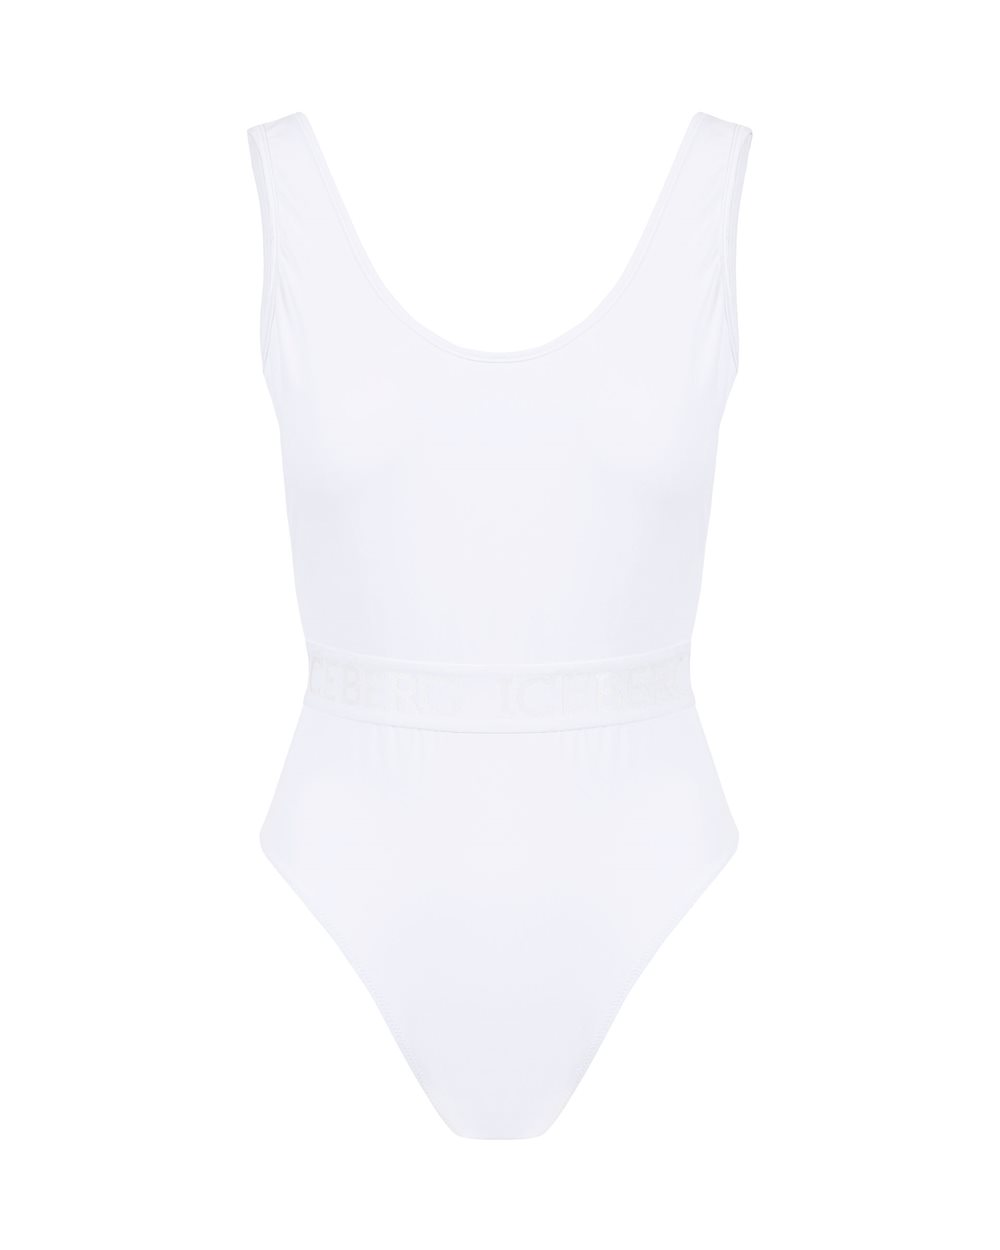 One-piece swimsuit with logo - Beachwear | Iceberg - Official Website